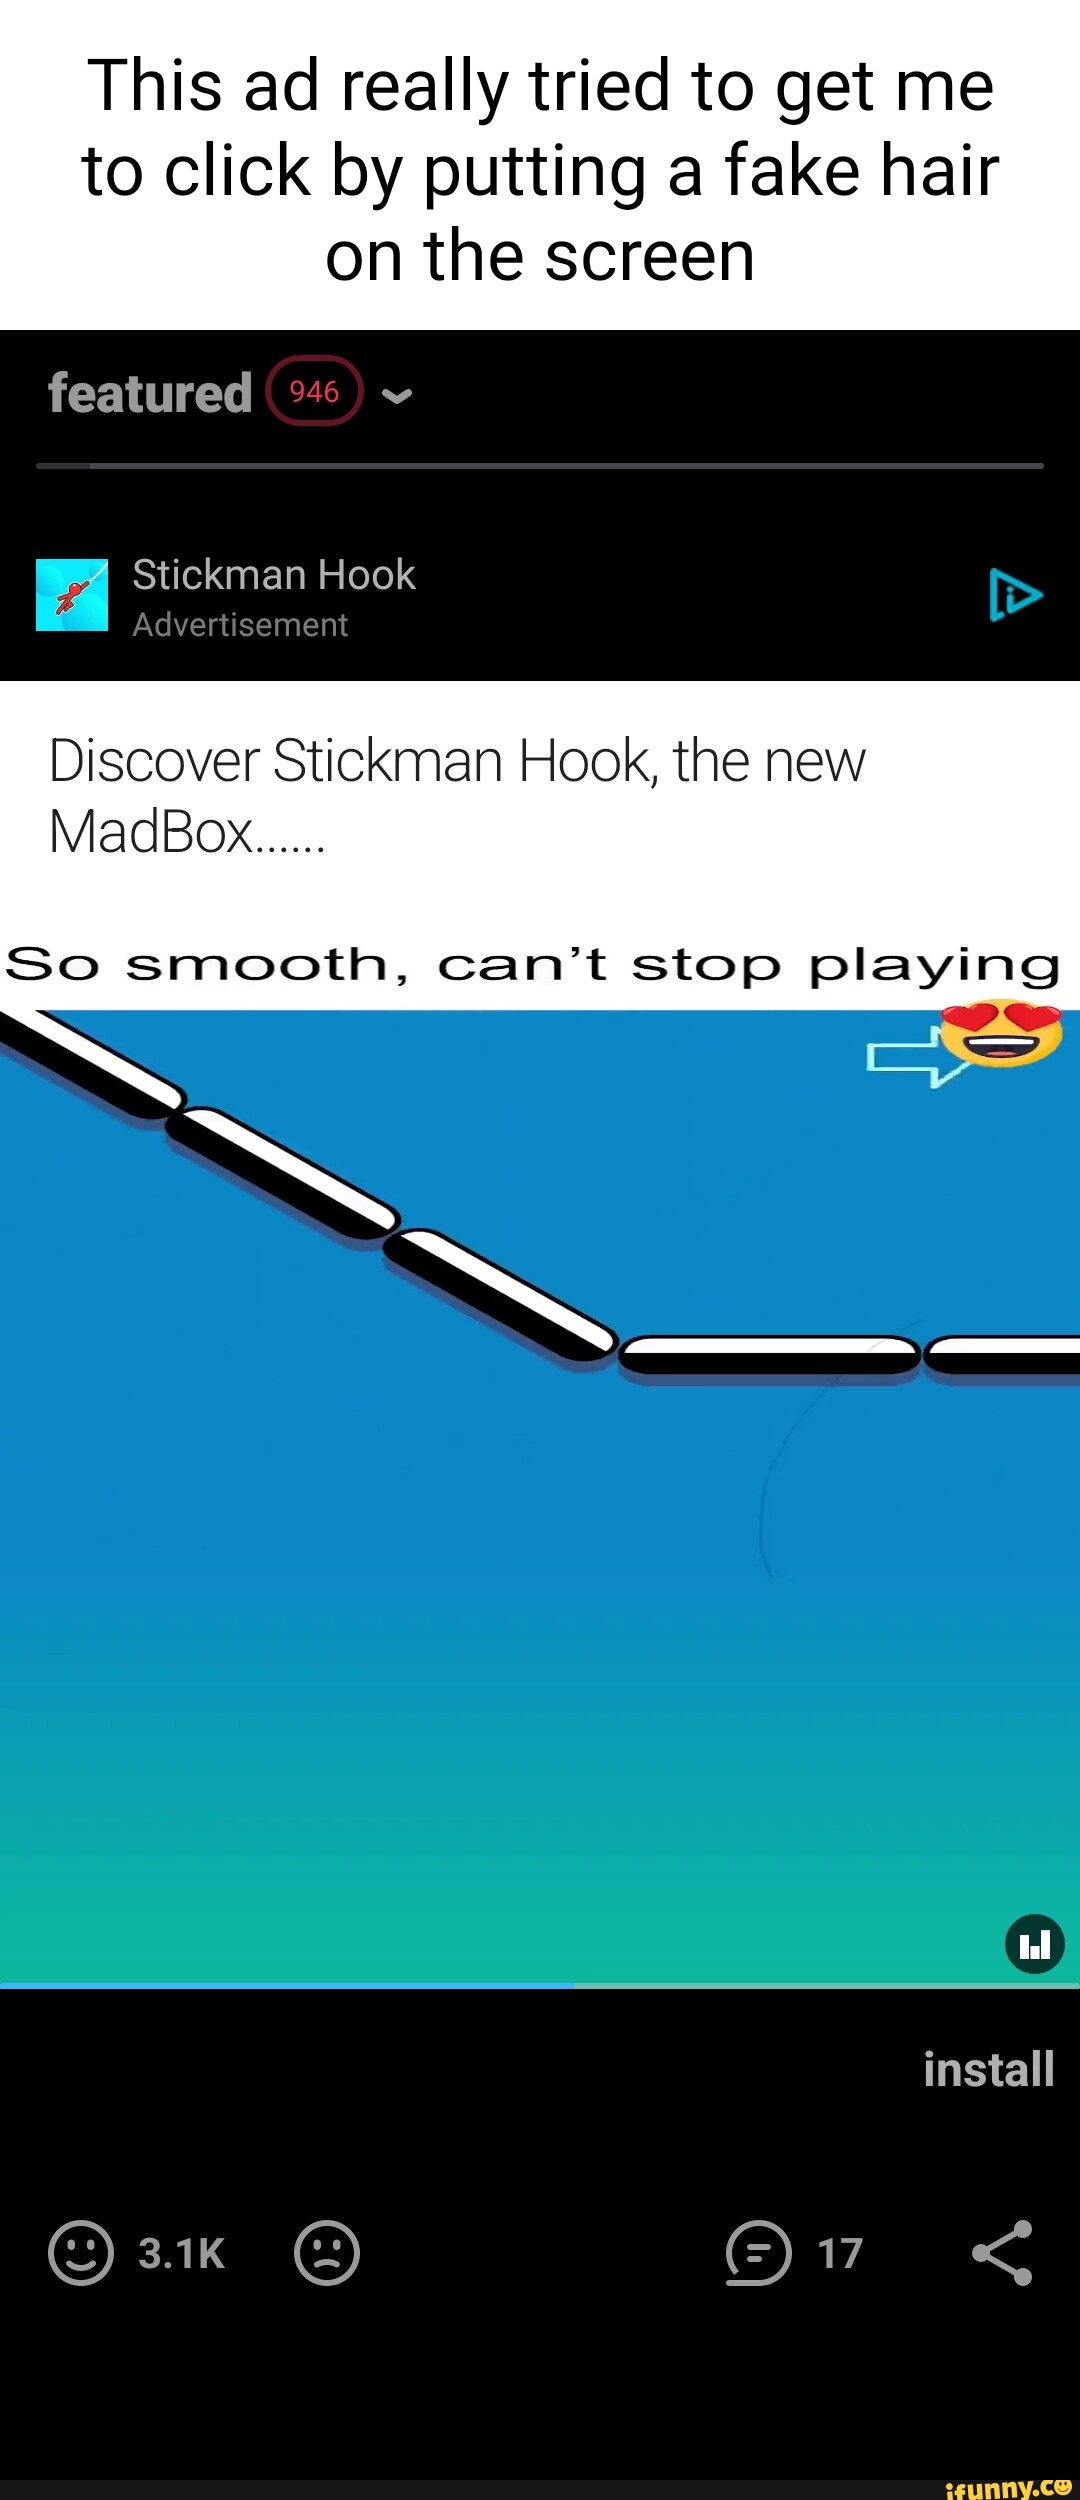 Stickman Hook by MADBOX